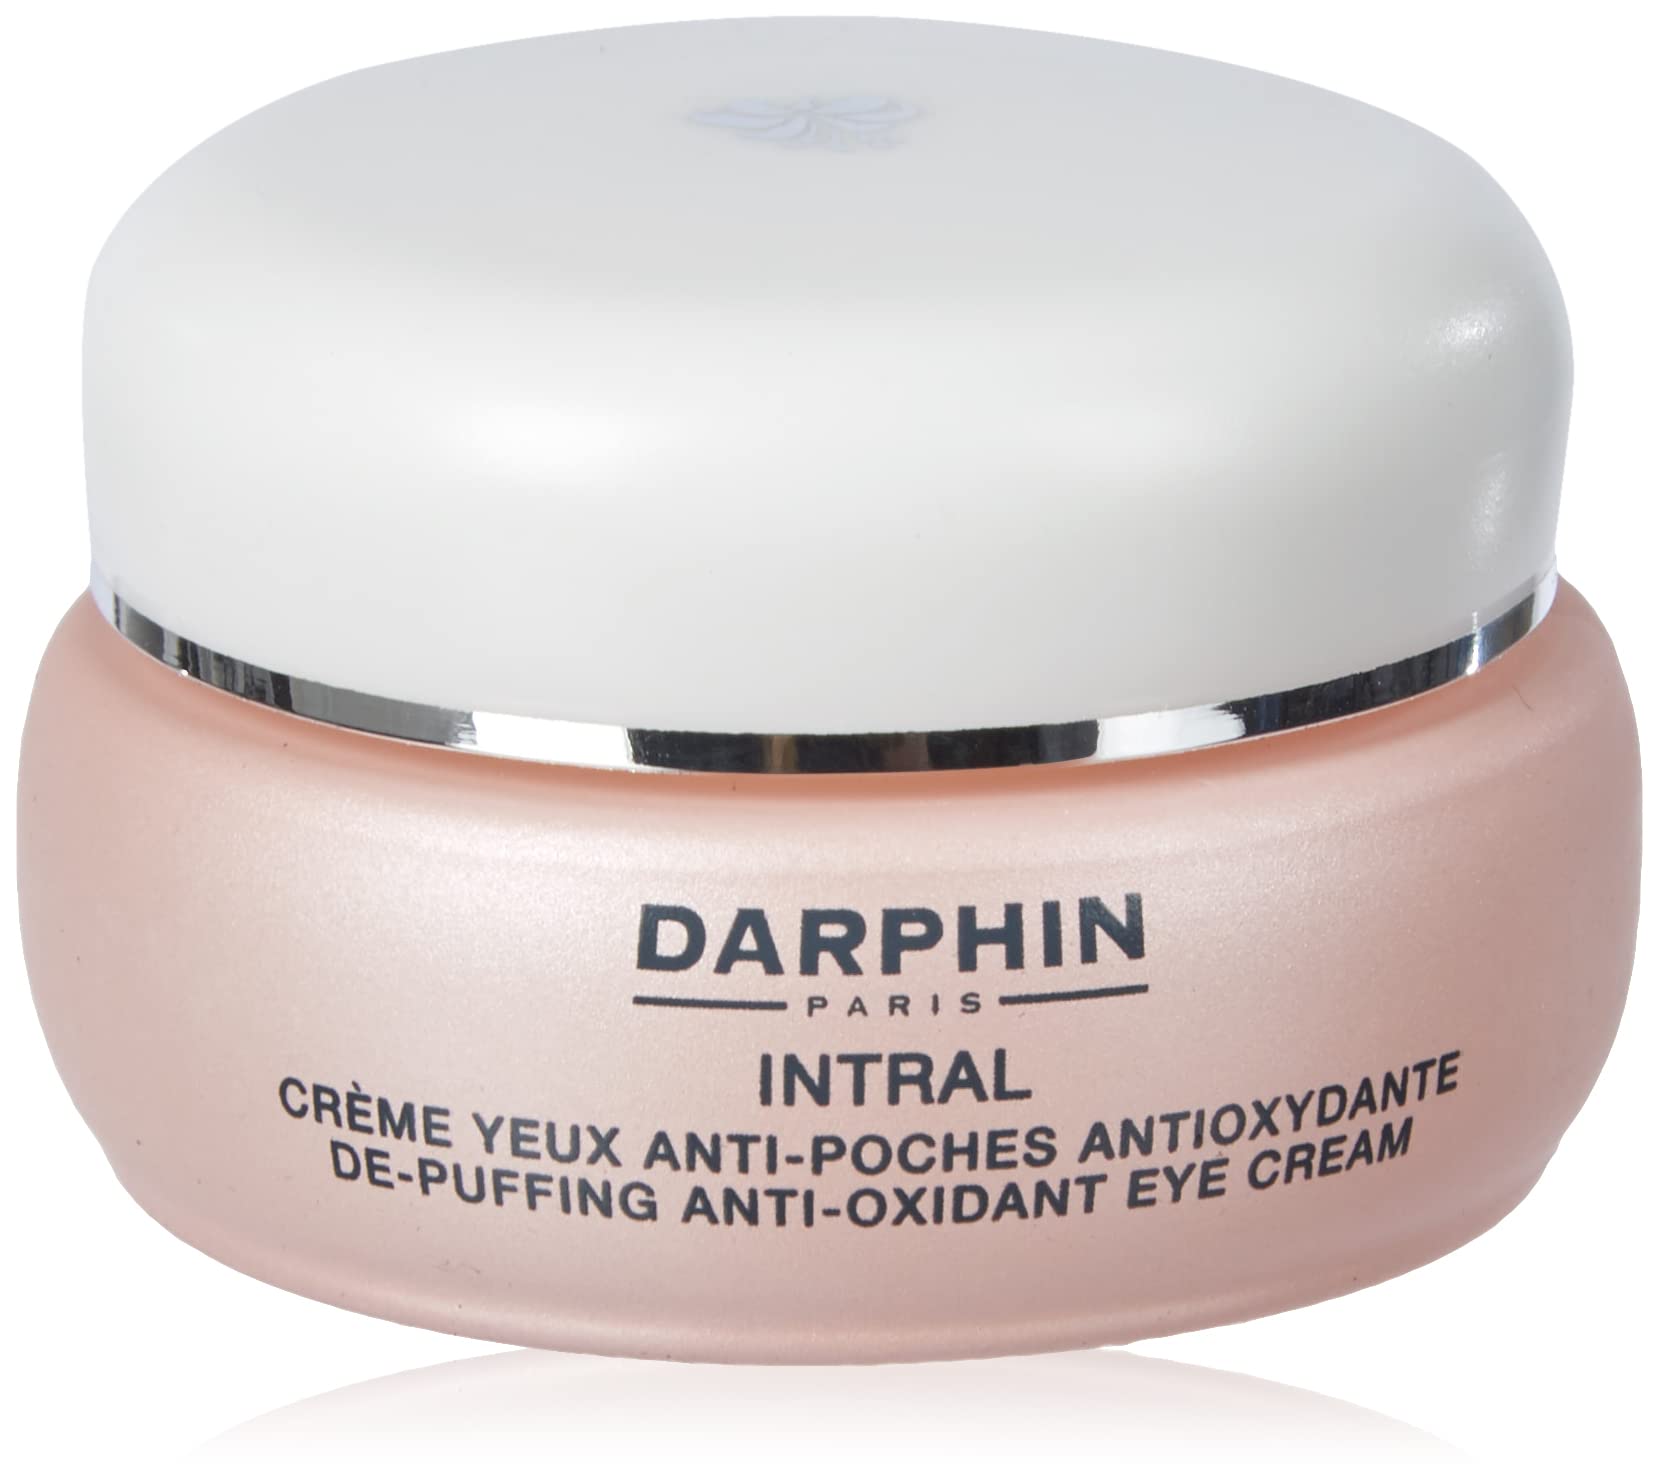 Darphin Intral De-Puffing Anti-Oxidant Eye Cream (15 ml)